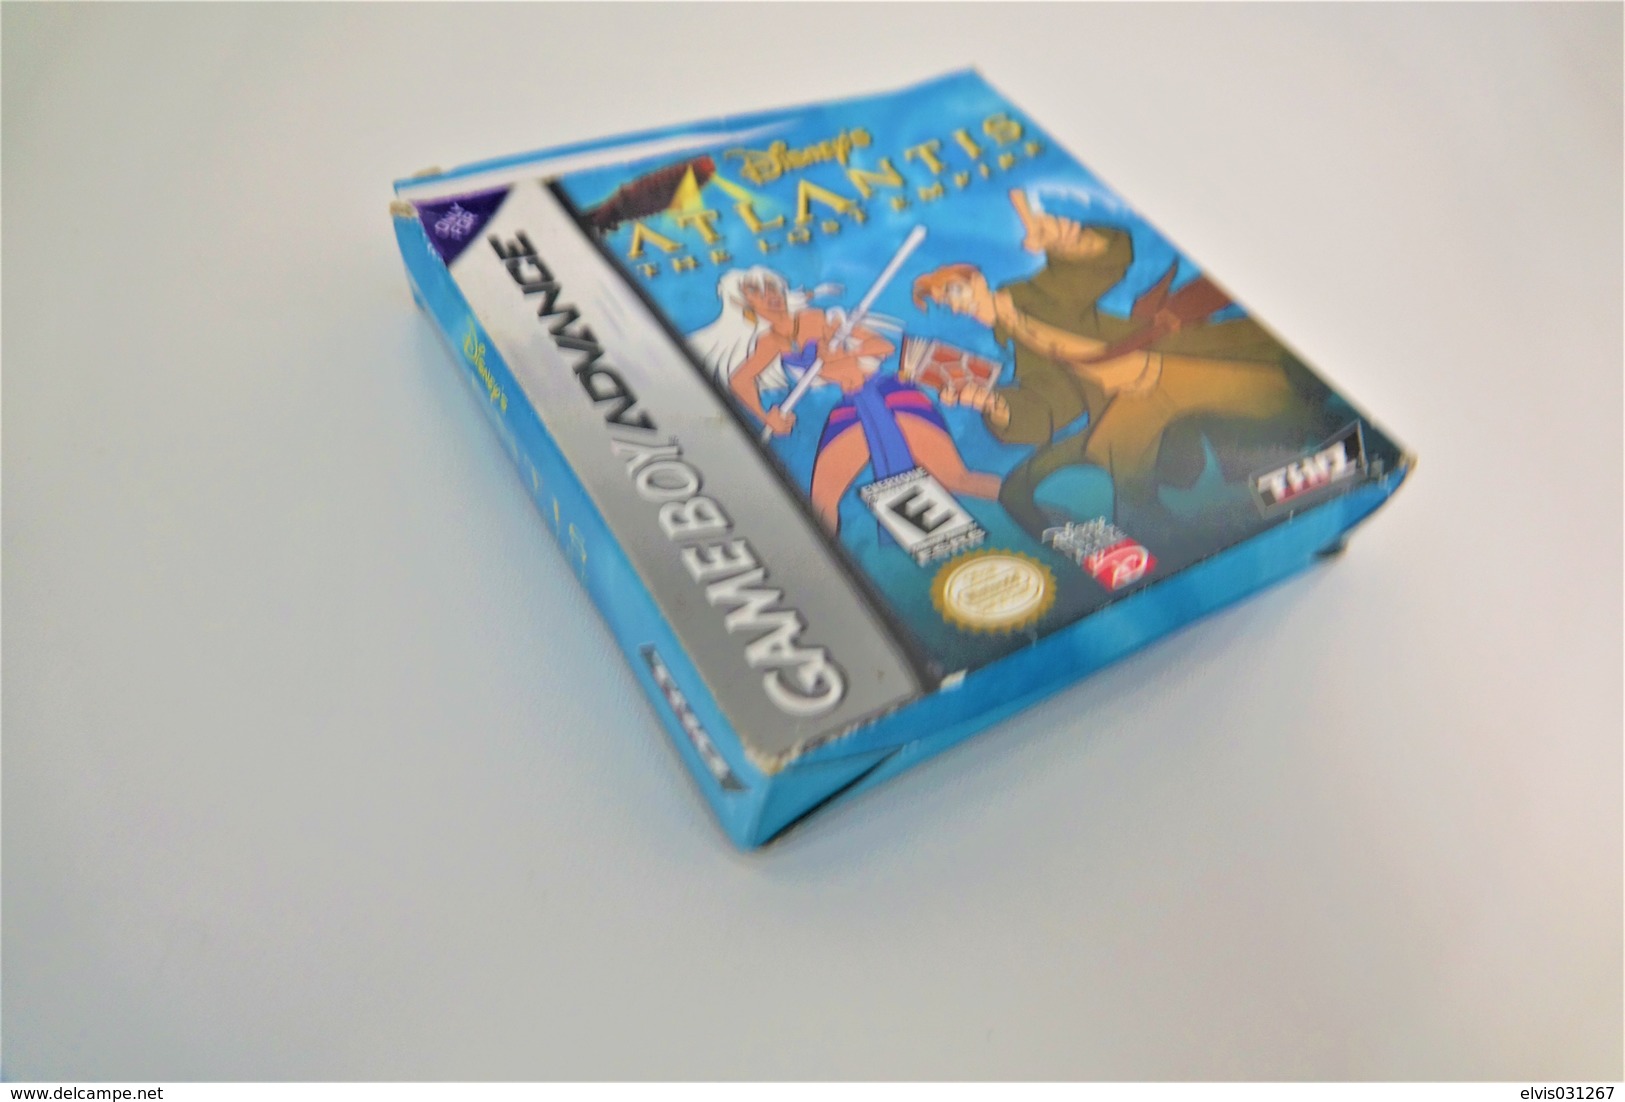 NINTENDO GAMEBOY ADVANCE: DISNEY'S ATLANTIS THE LOST EMPIRE WITH BOX - THQ - 2001 - Game Boy Advance